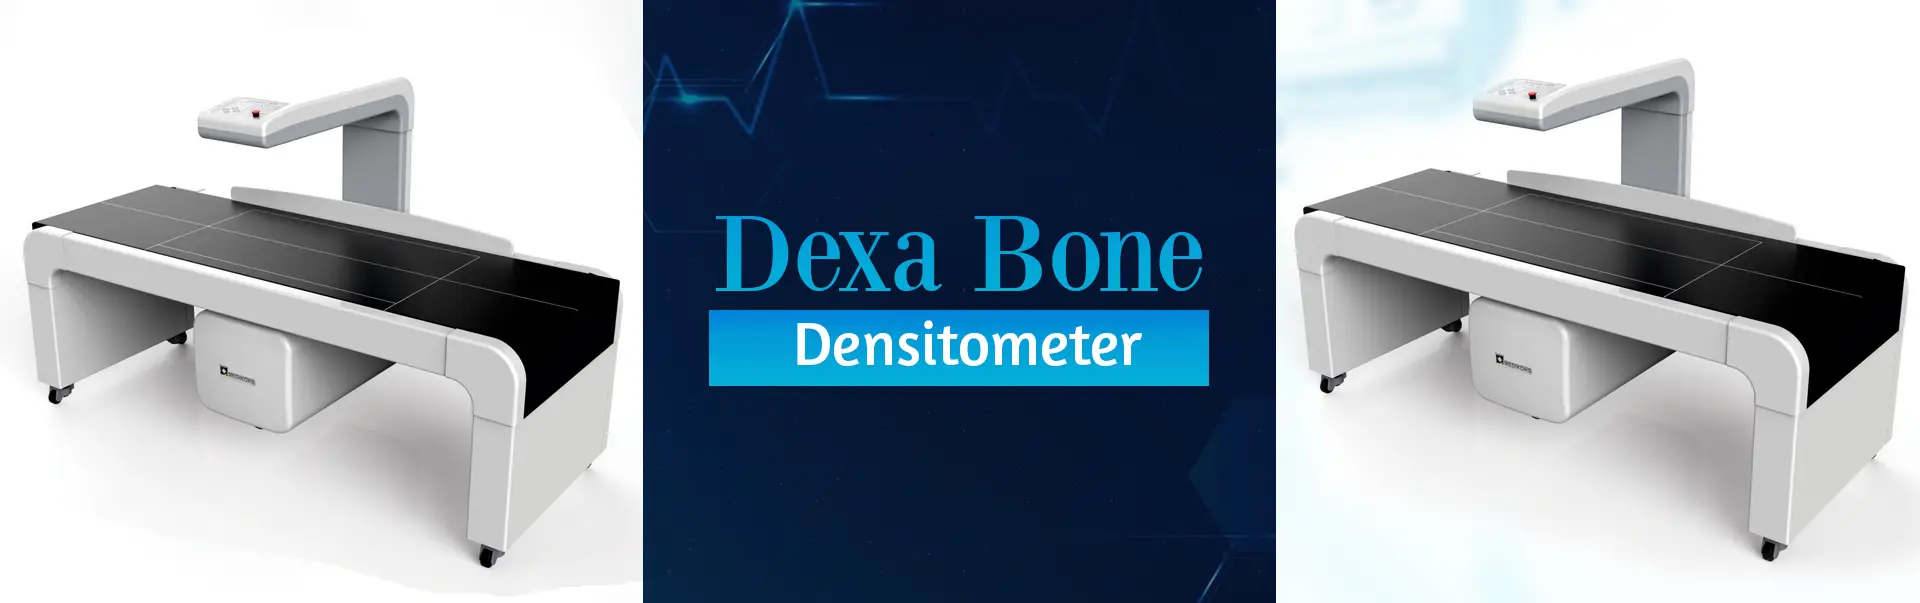 Dexa Bone Densitometer Manufacturers in Hyderabad